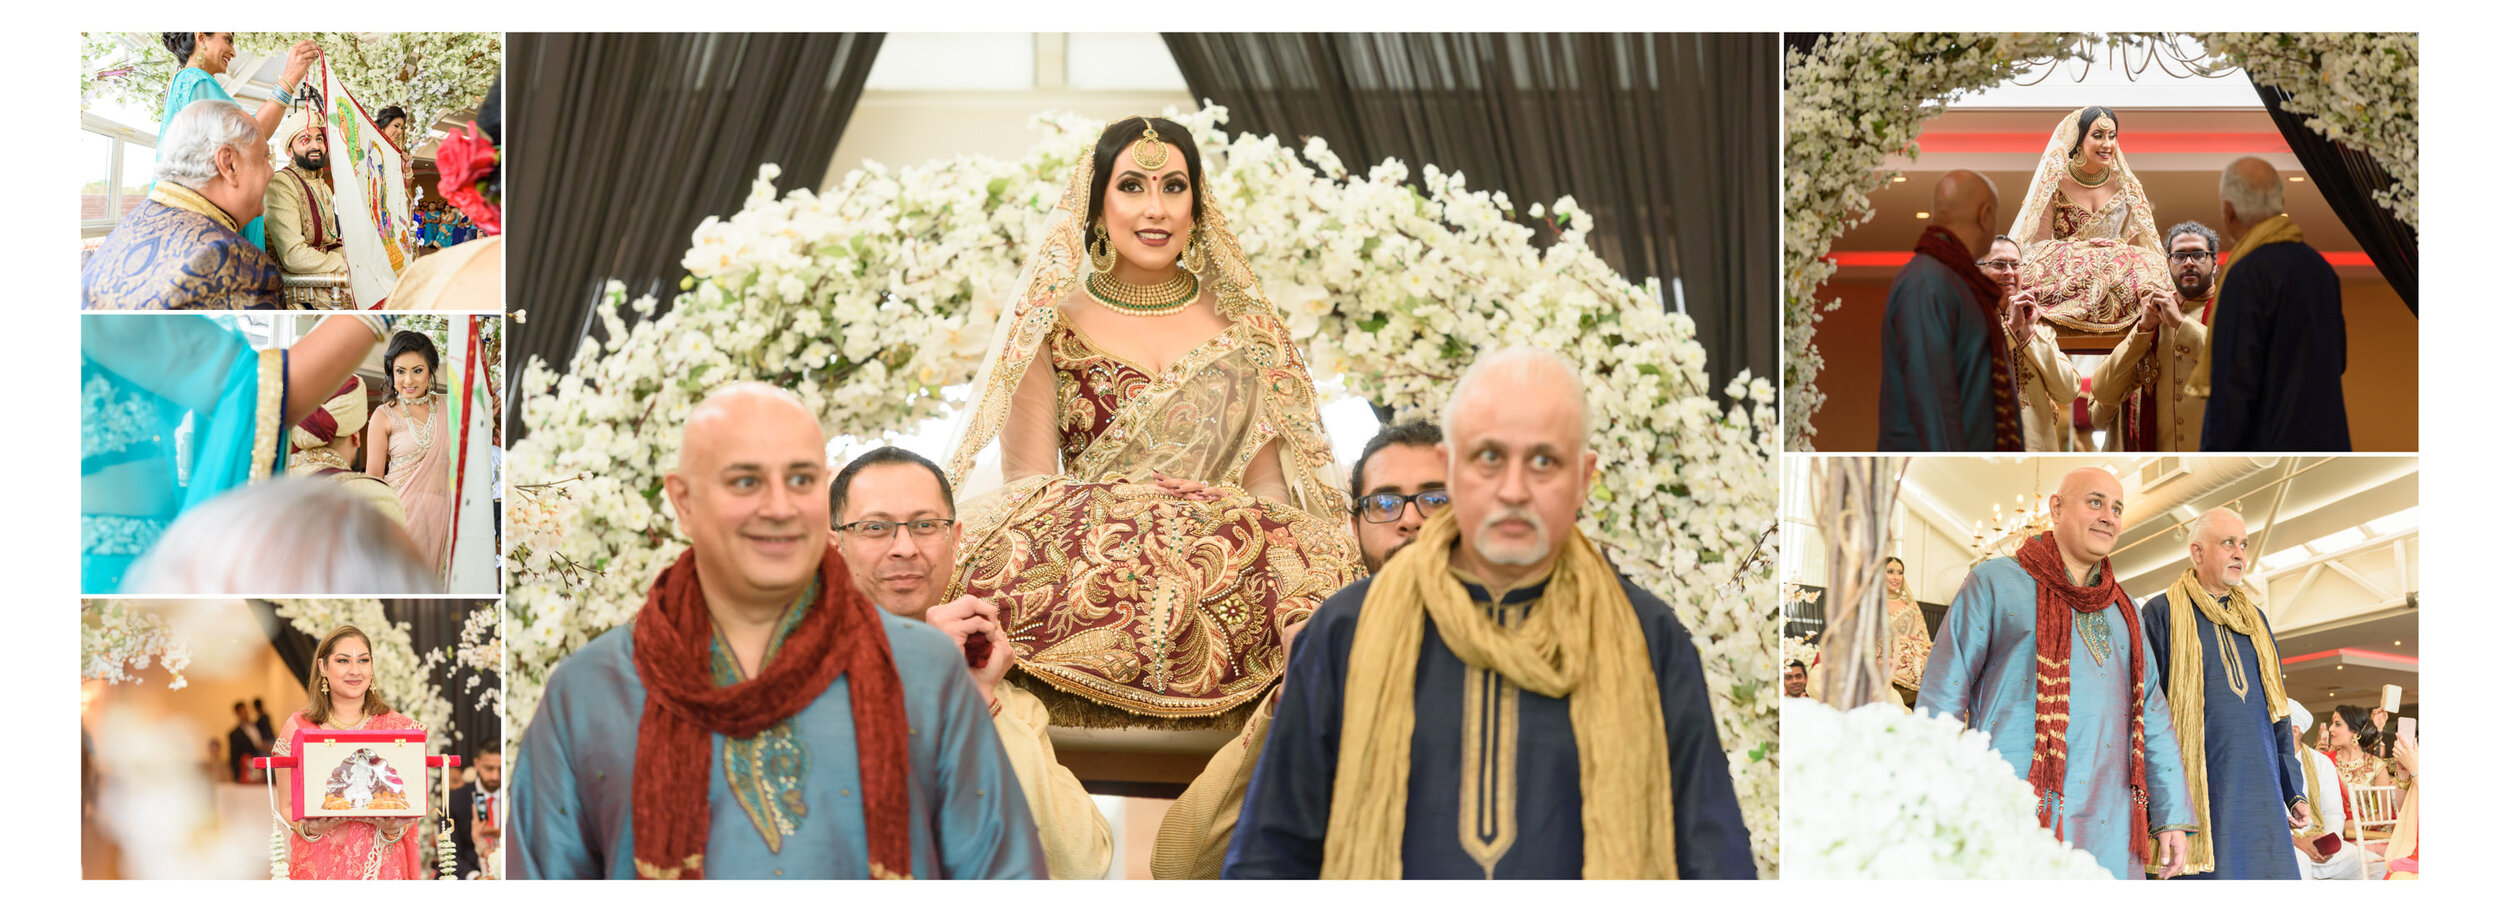 satnam photography luxury hindu wedding album -23.jpg